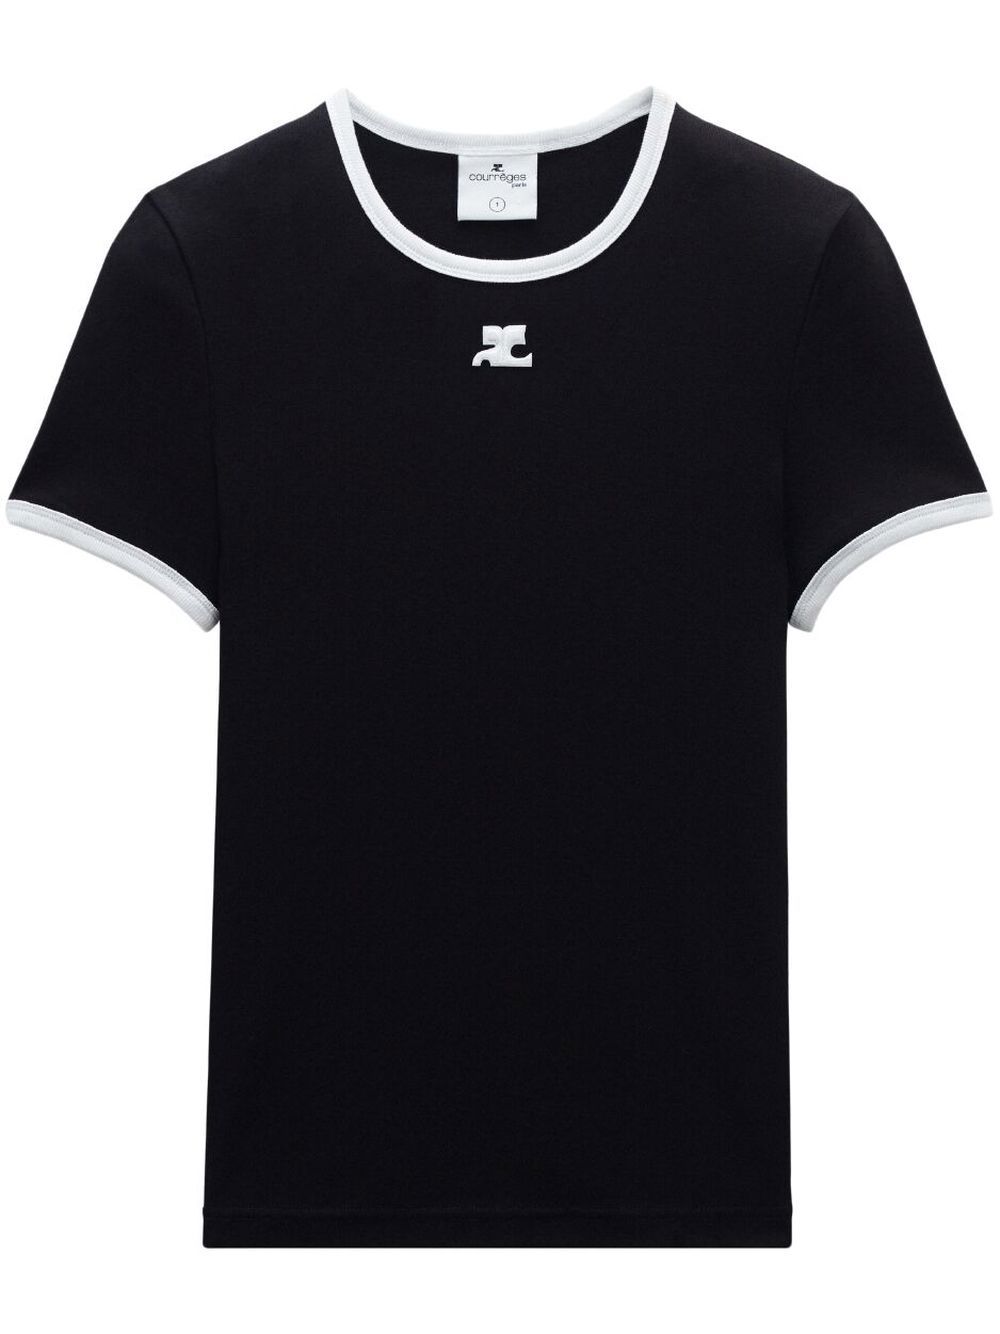 T-shirt nera contrasti bianchi